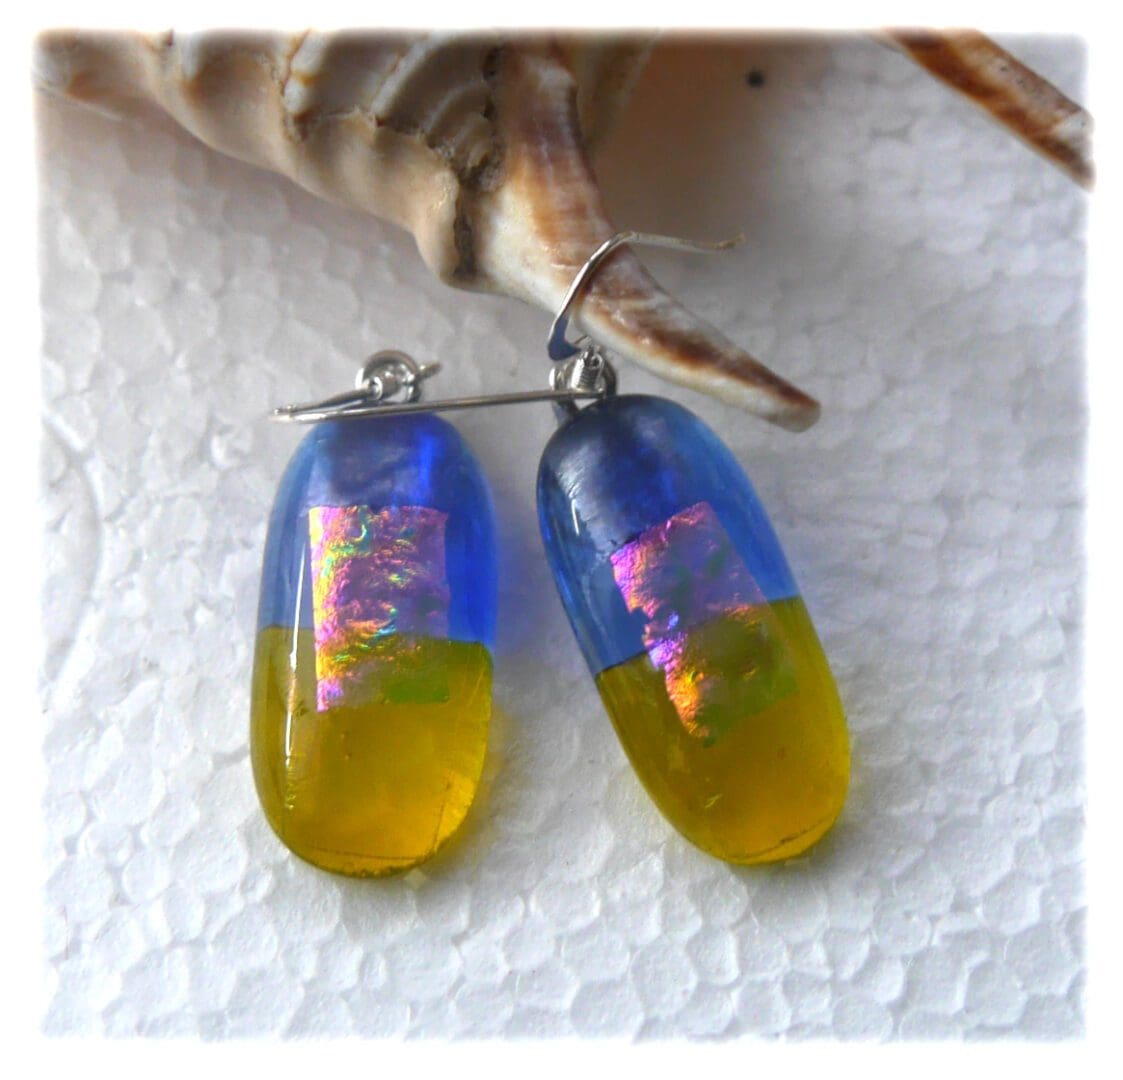 Ukraine Earrings blue yellow dichroic handmade fused glass silver hooks